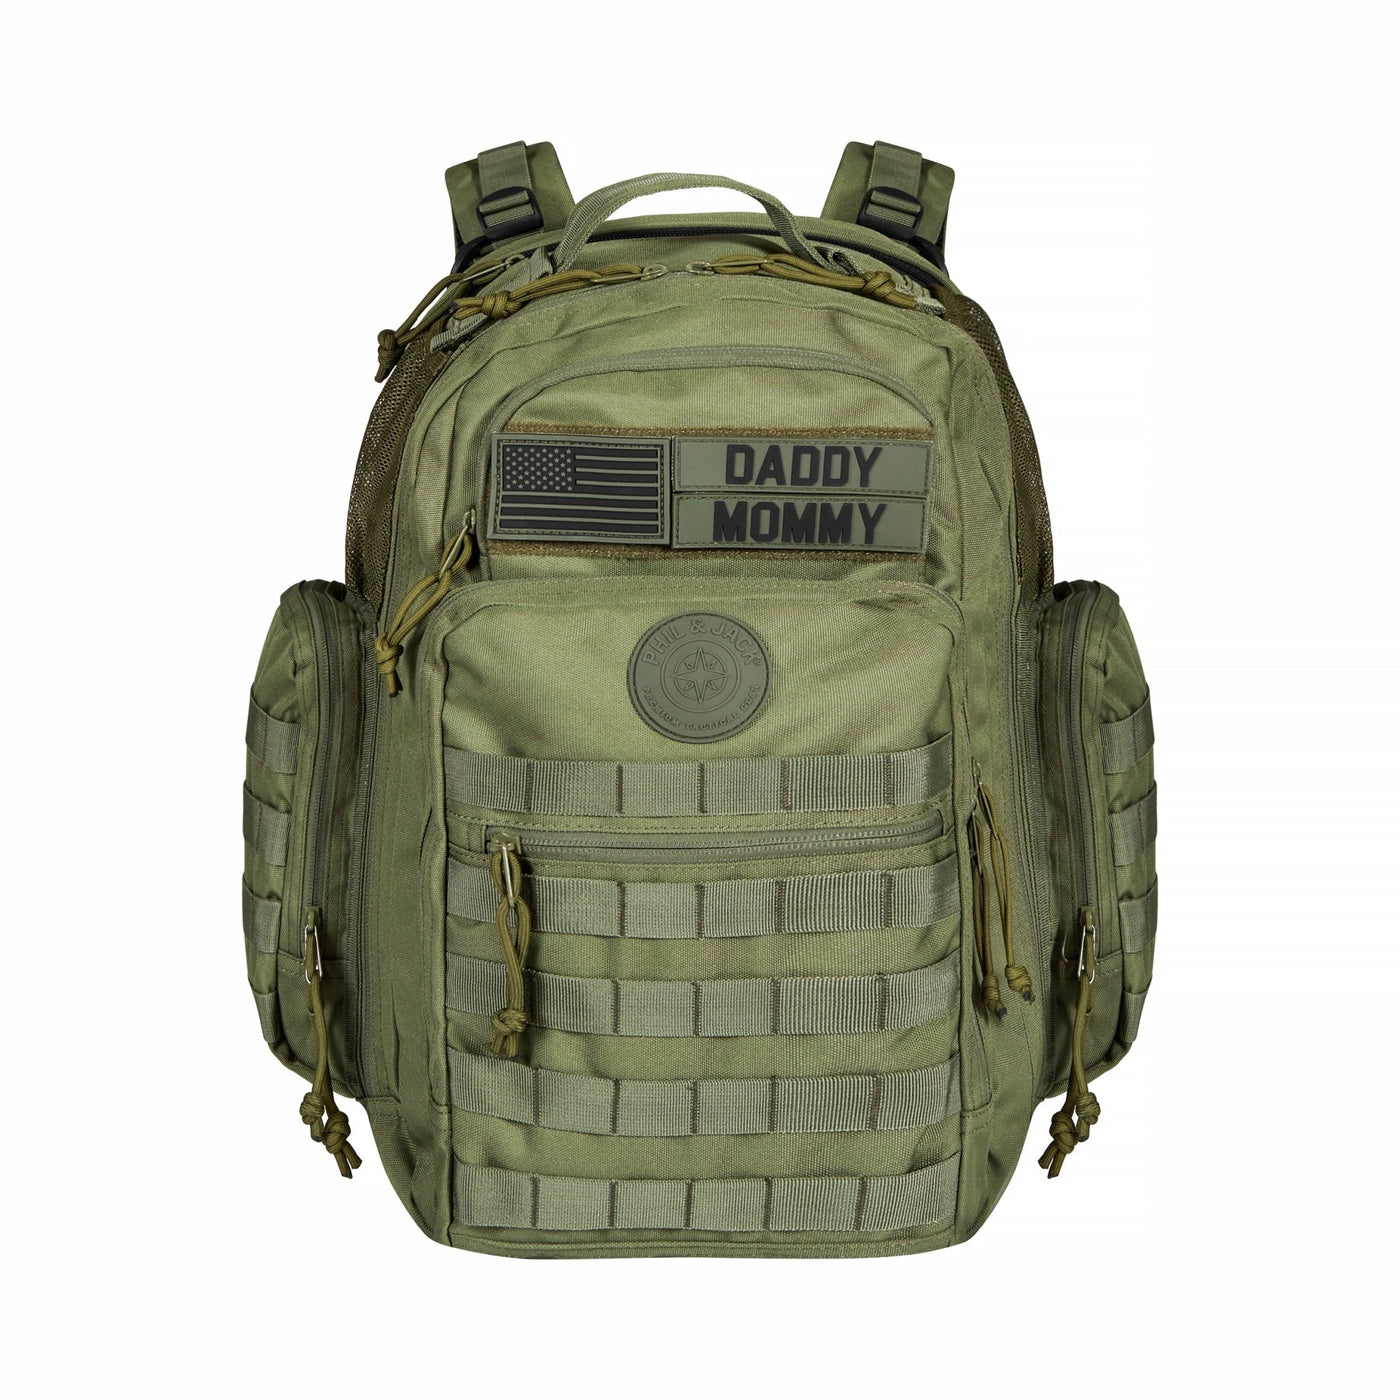 Mens baby Bag Diaper bag Gear for dads